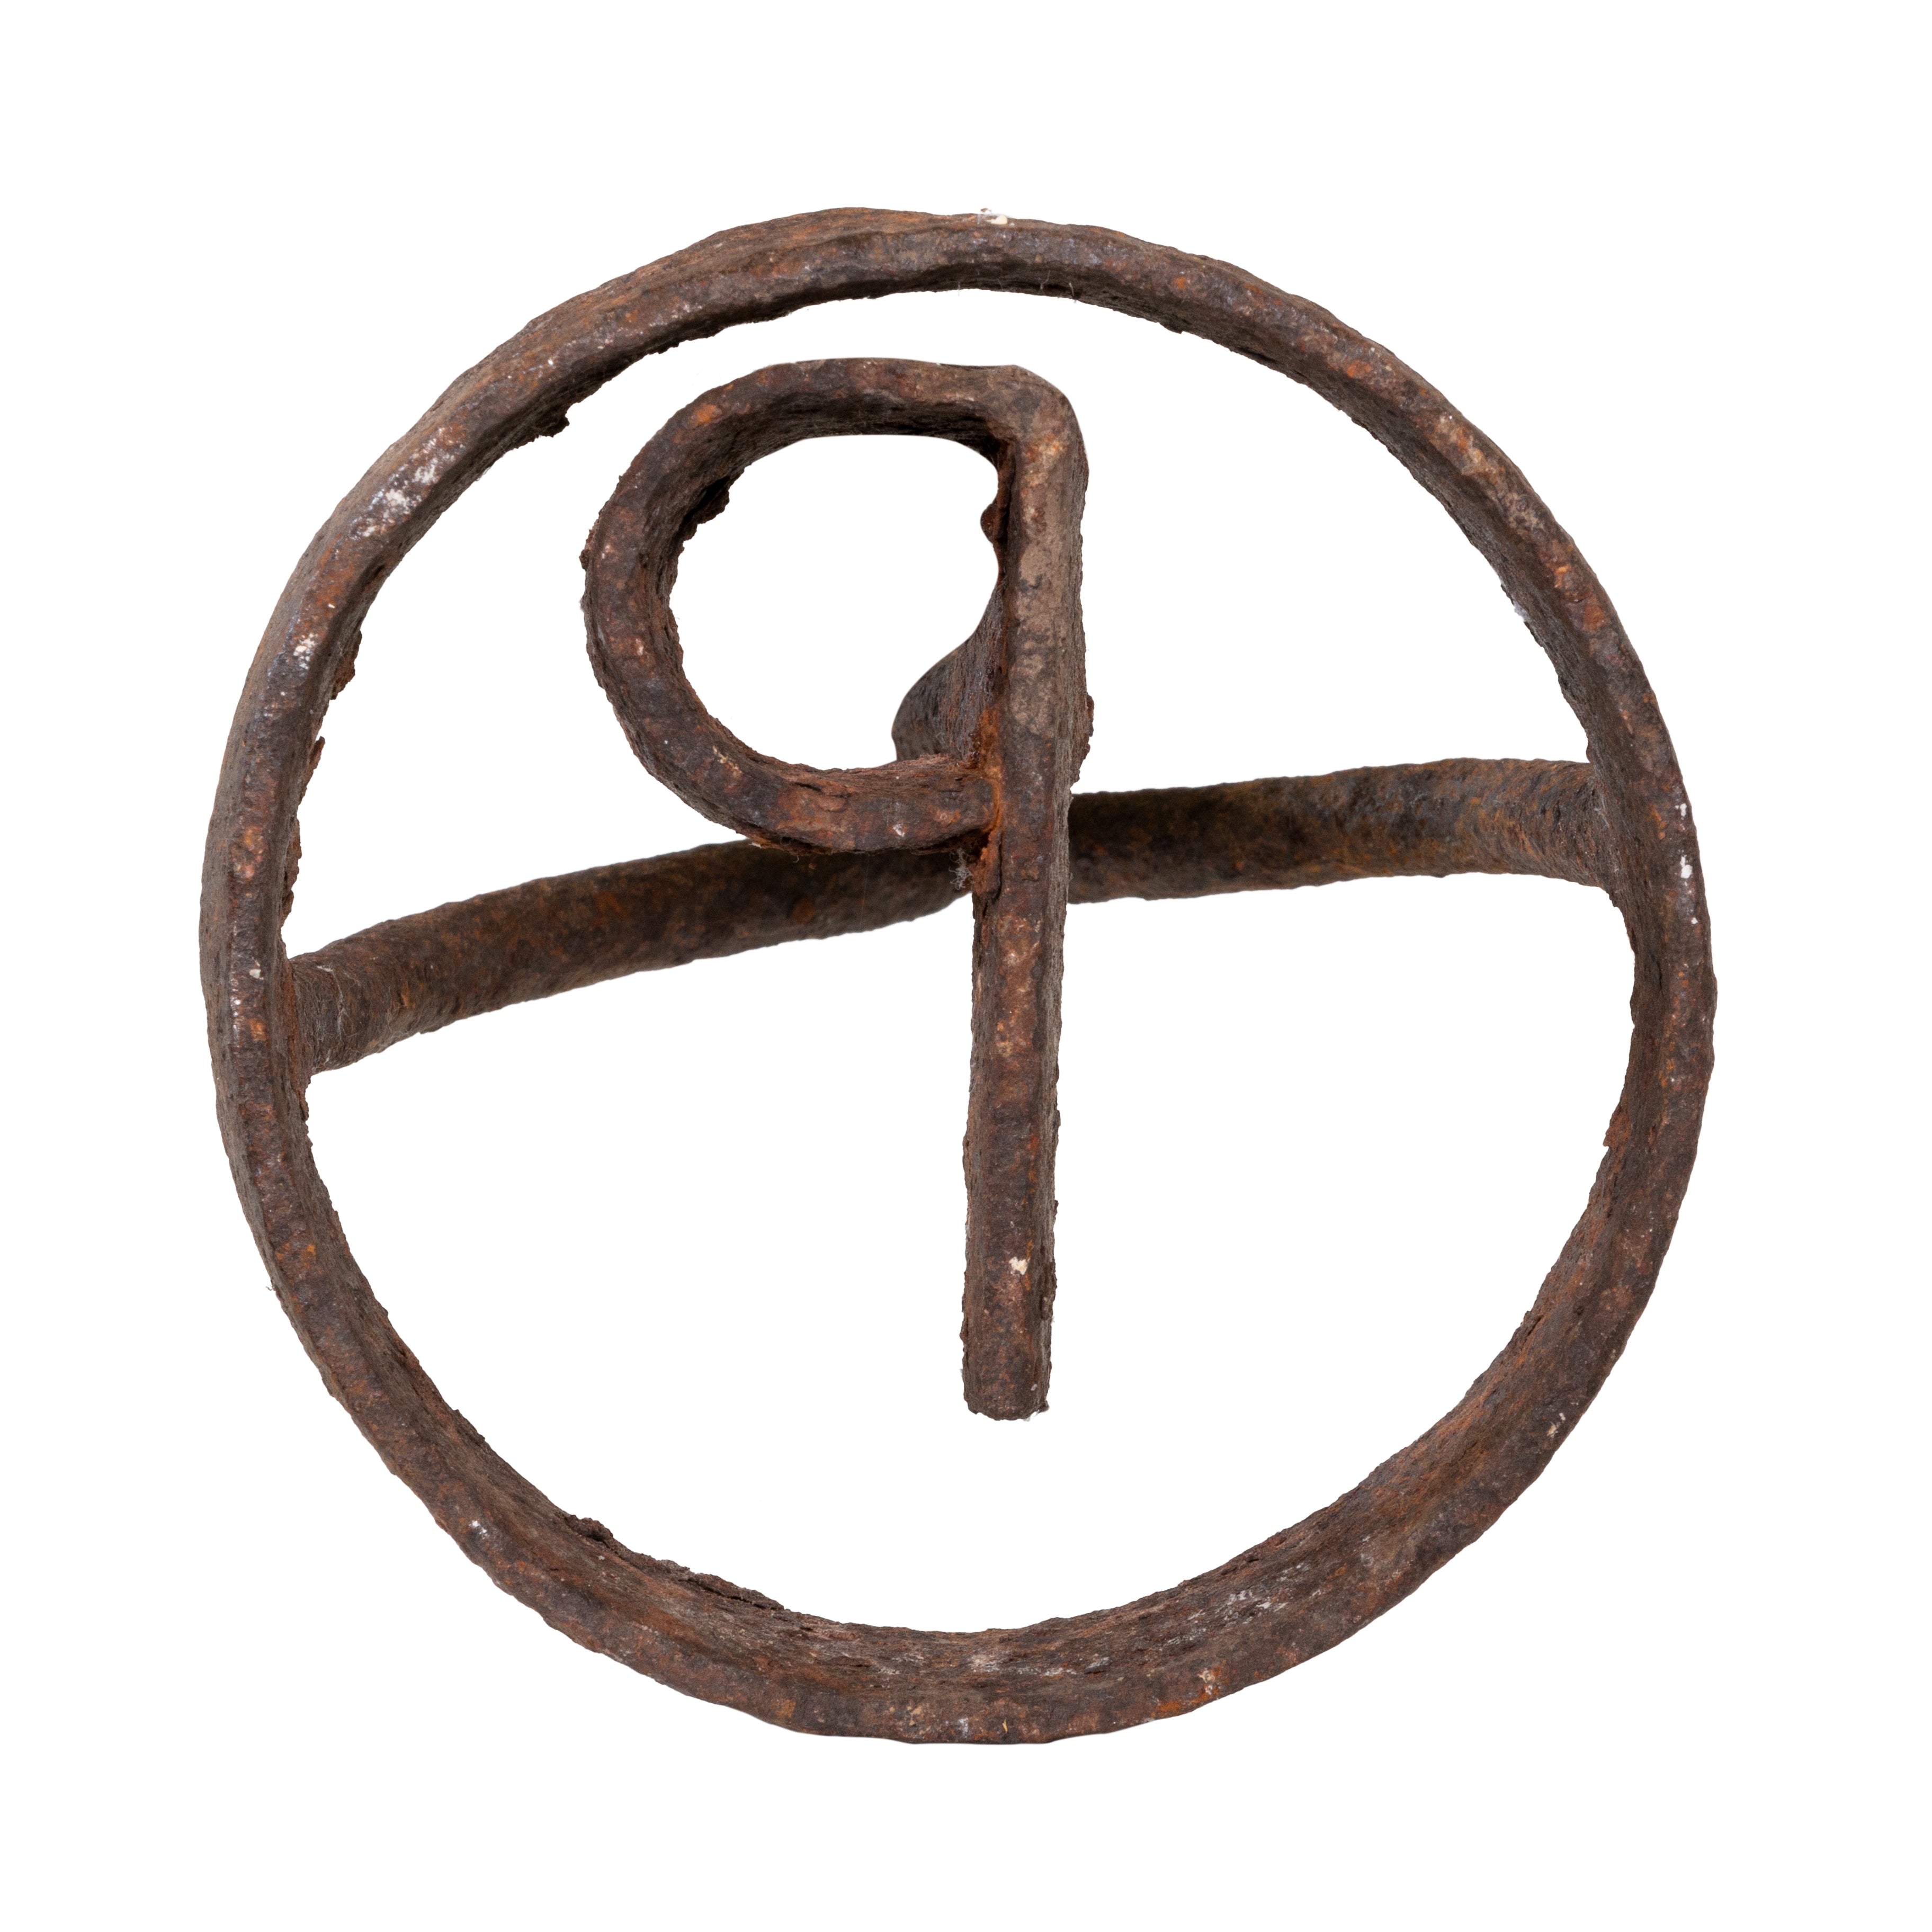 Circle P Branding Iron